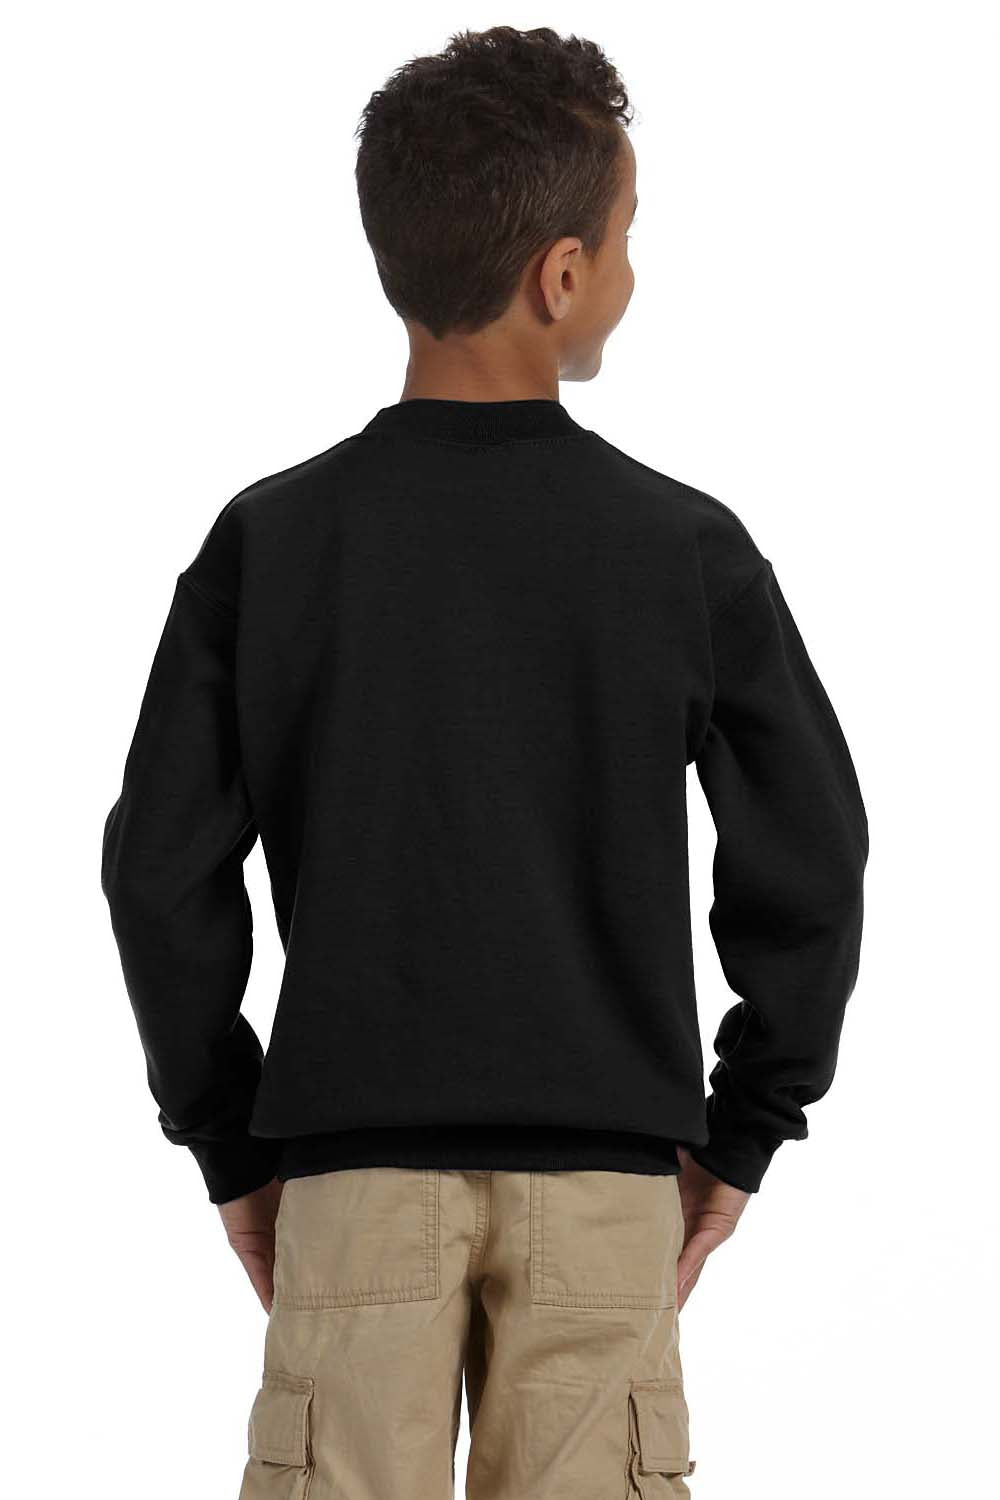 Gildan G180B Youth Fleece Crewneck Sweatshirt Black Back